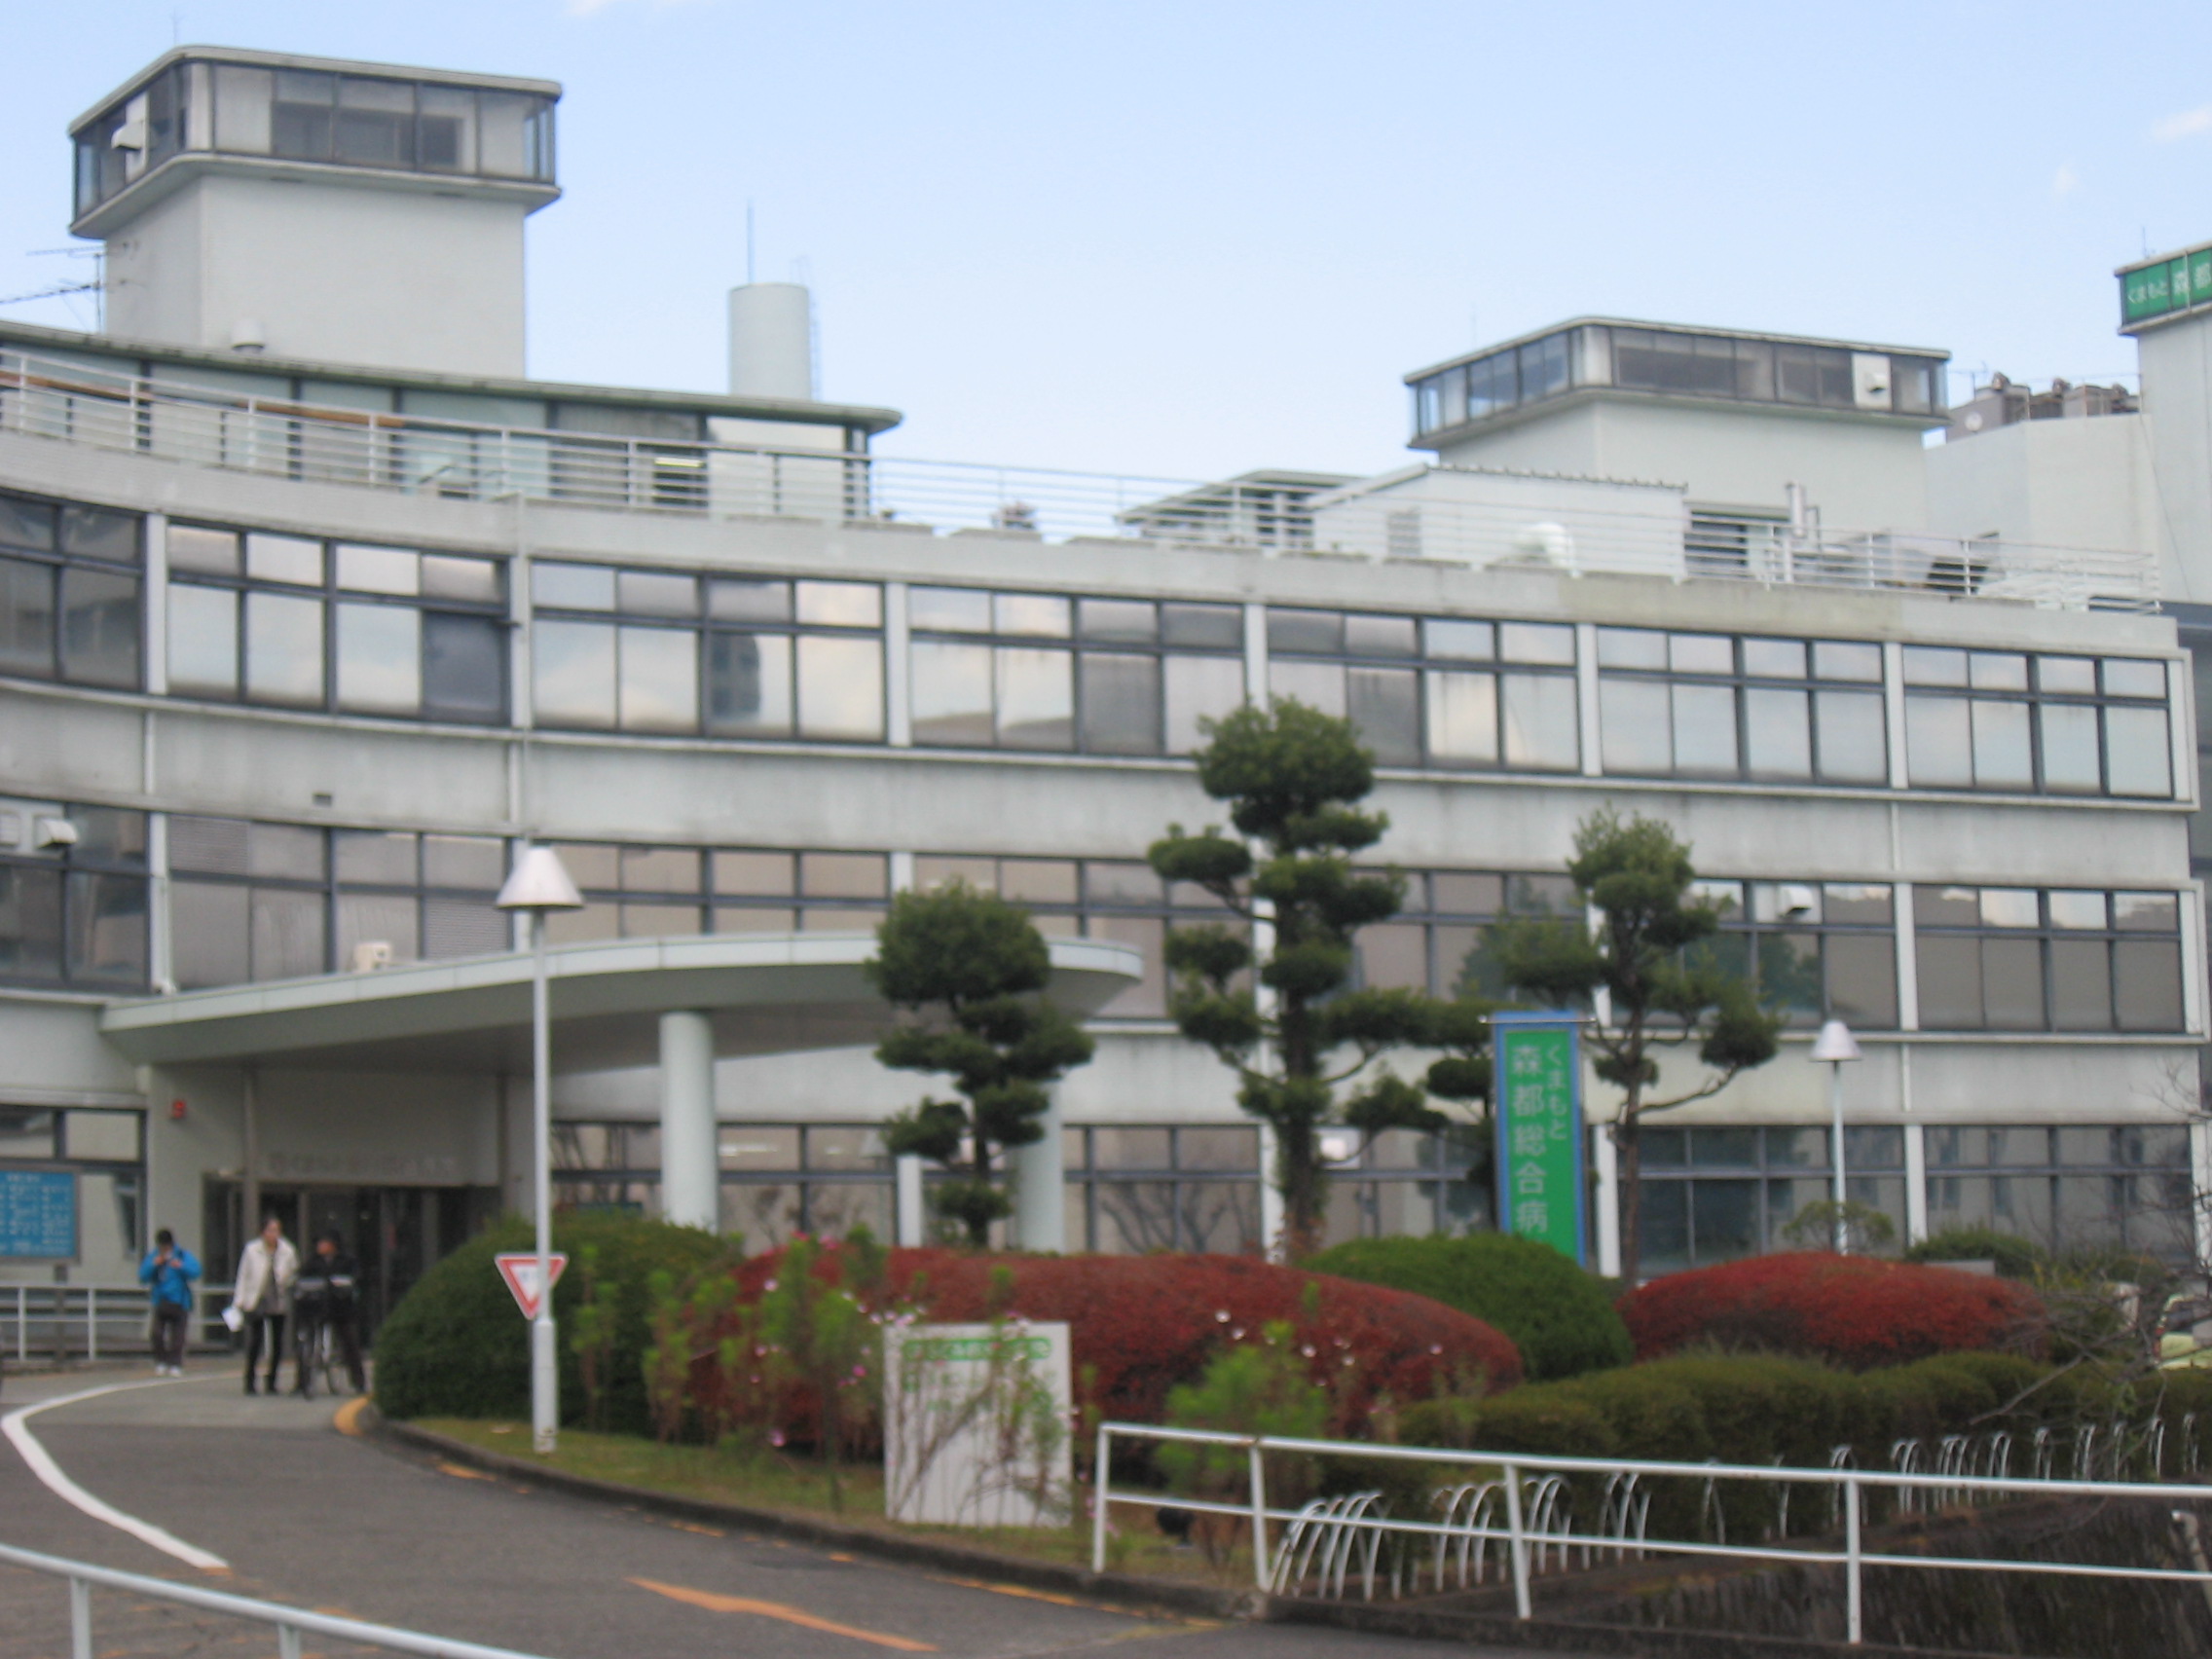 Hospital. Kumamoto forest Metropolitan General Hospital (Hospital) to 270m